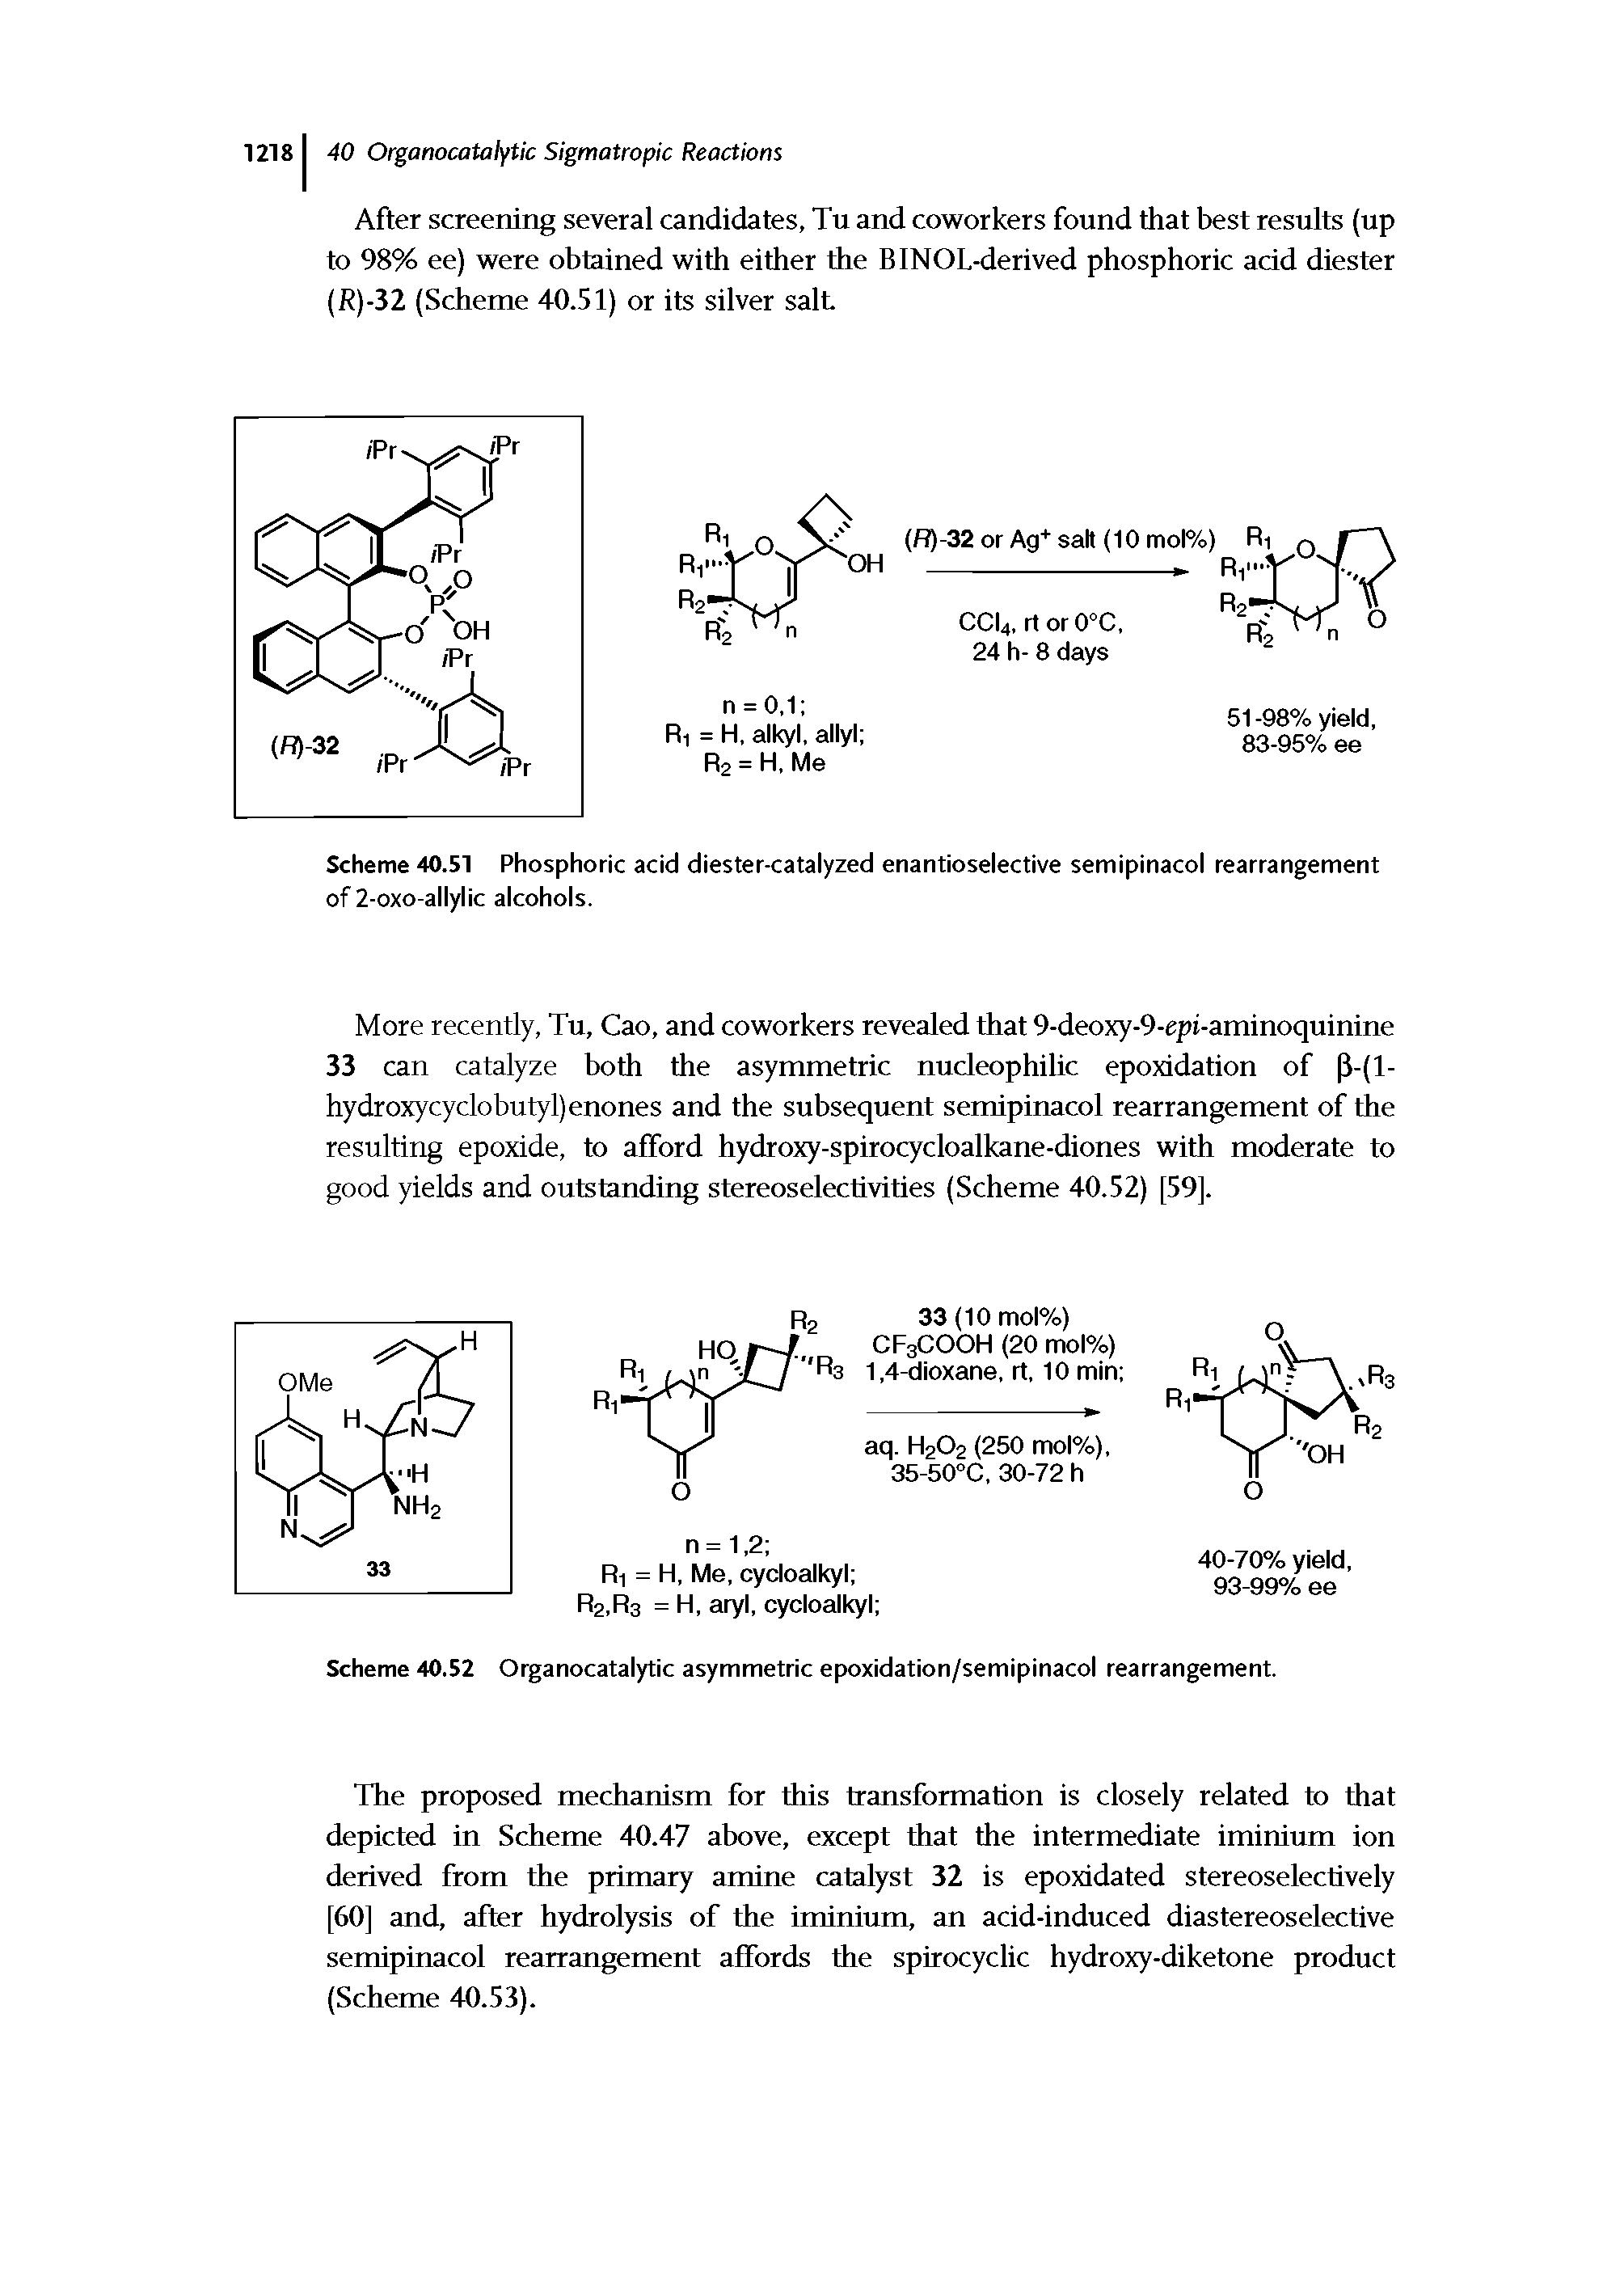 Scheme 40.51 Phosphoric acid diester-catalyzed enantioselective semipinacol rearrangement of 2-oxo-allylic alcohols.